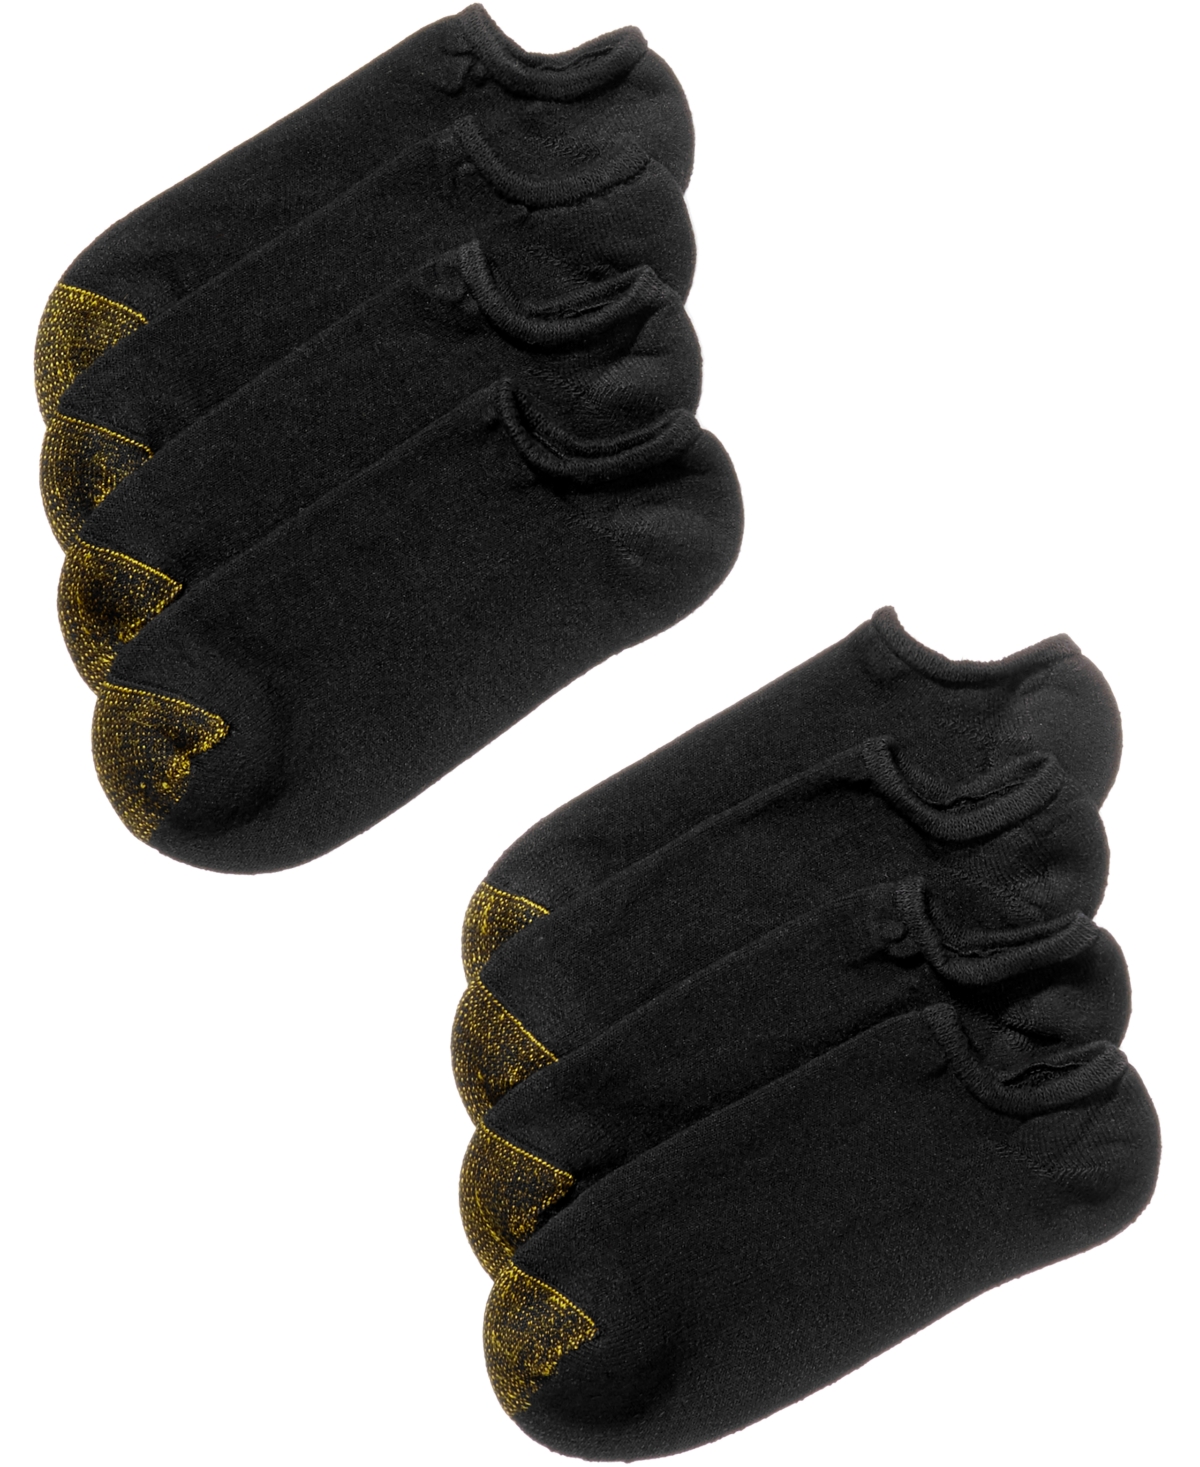 Gold Toe Men's 8-Pack Athletic No-Show Socks